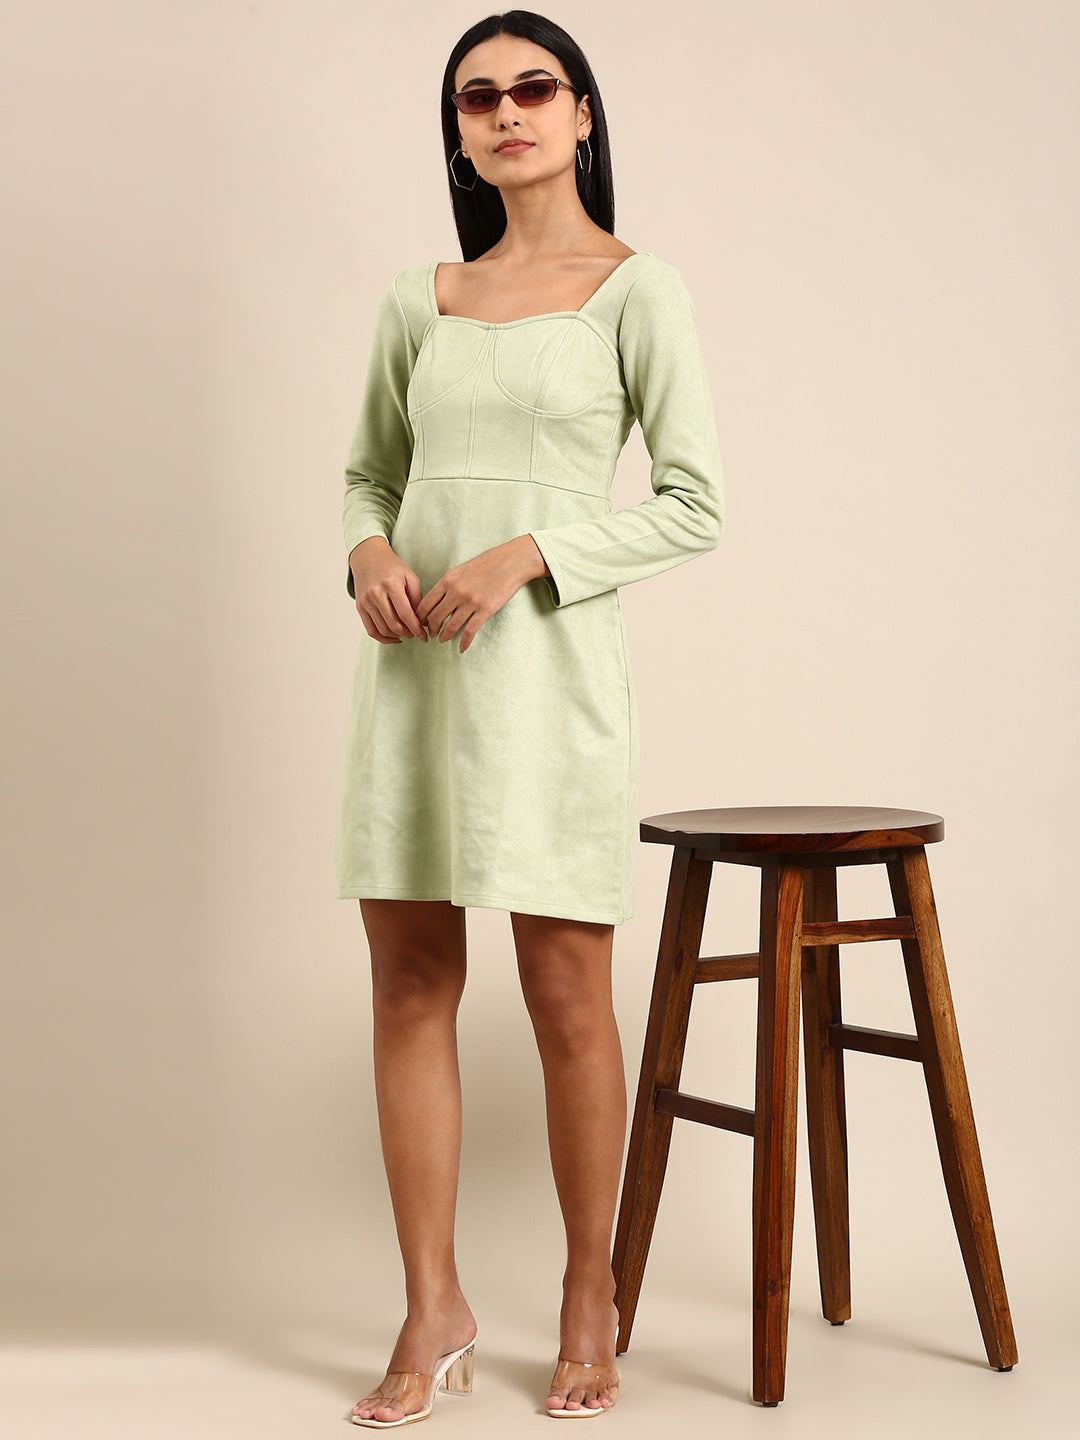 Athena Sea Green A-Line Dress - Athena Lifestyle